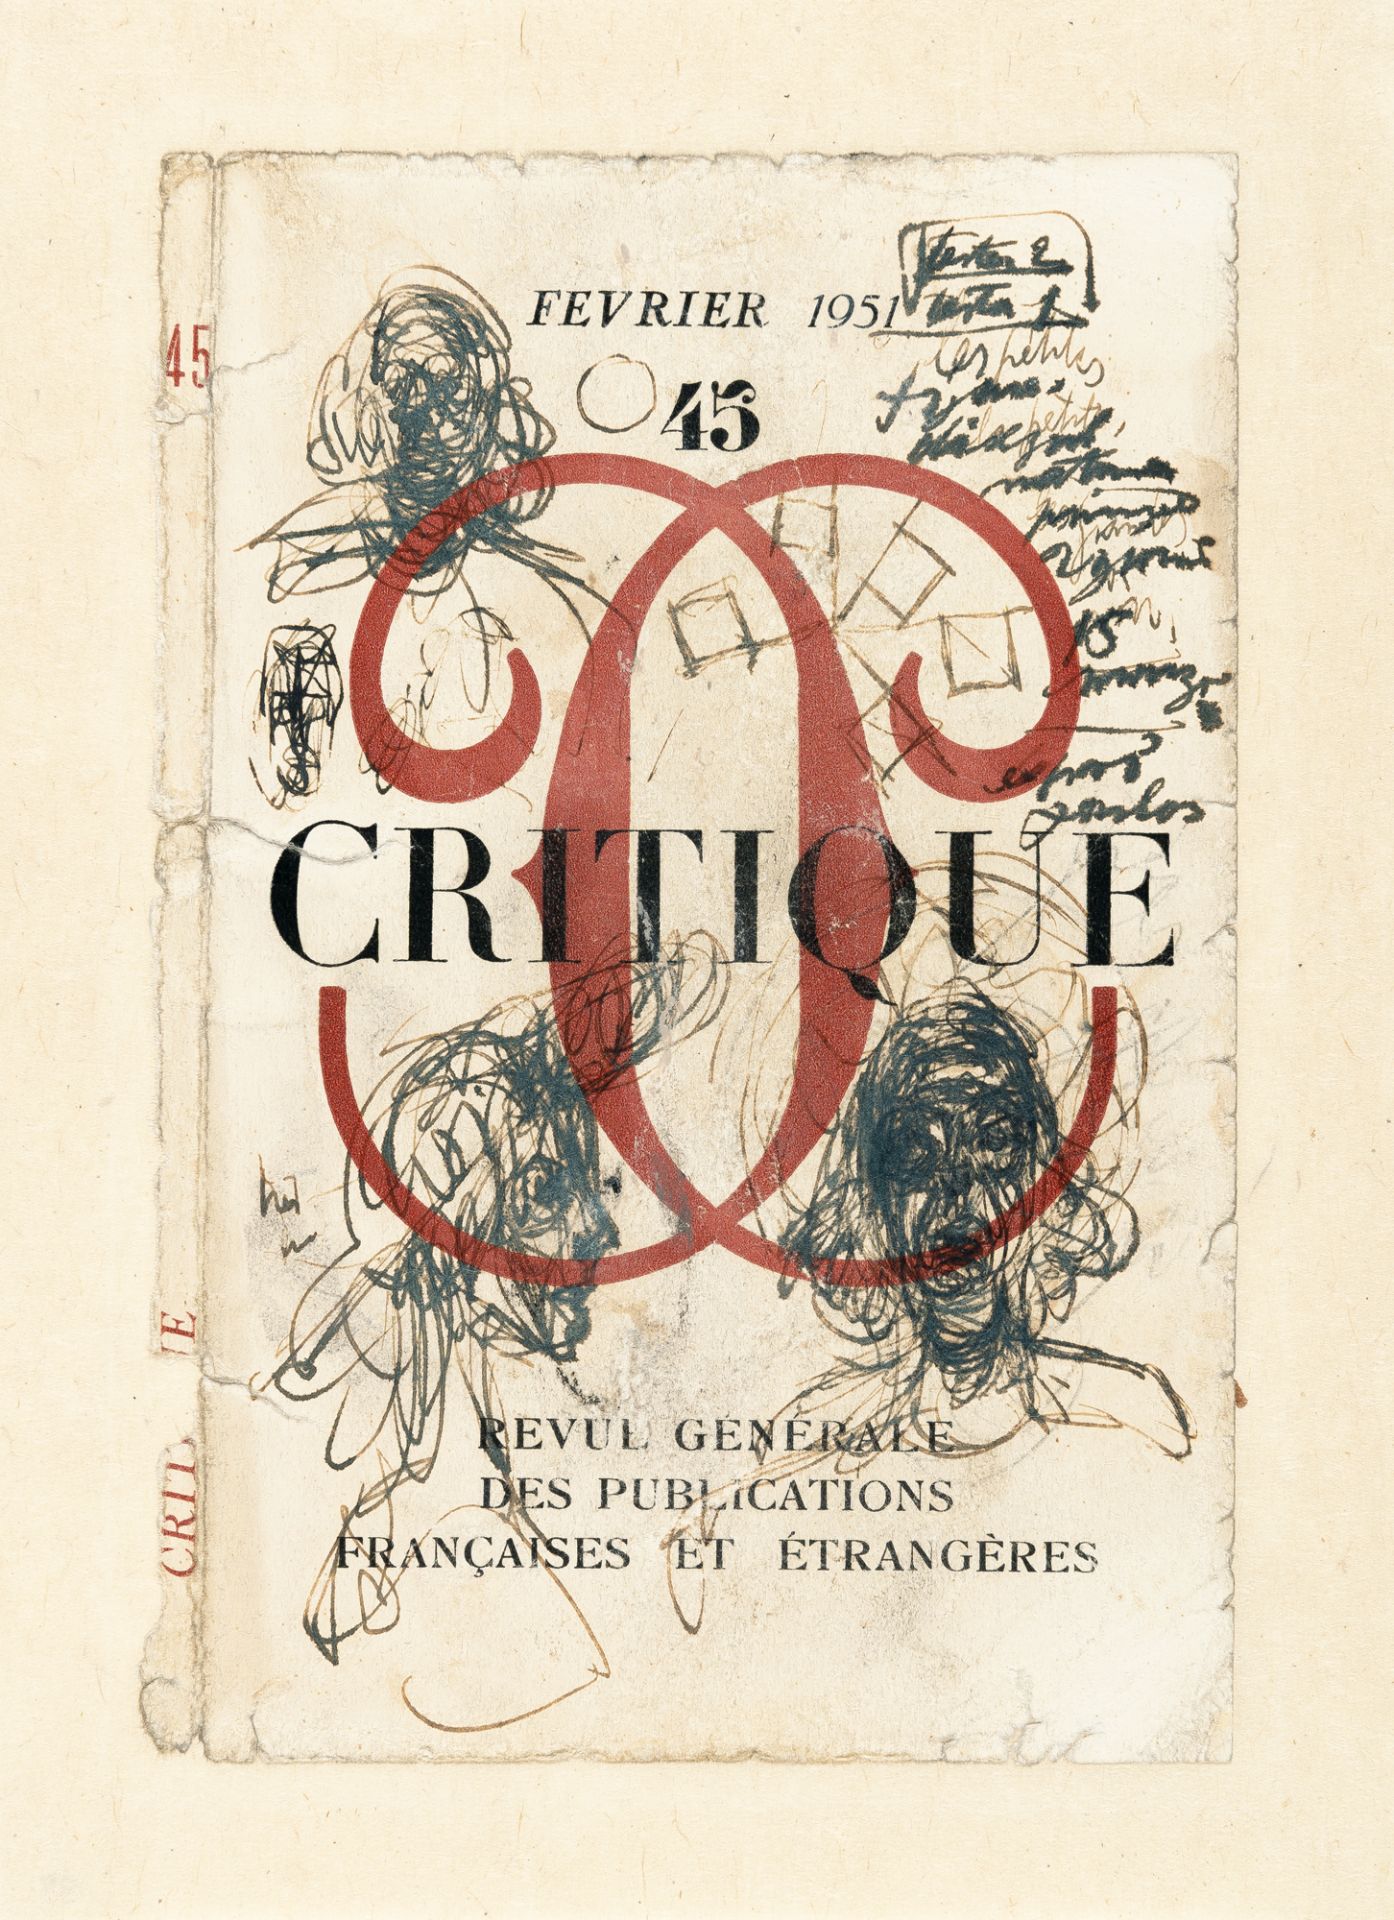 Alberto Giacometti (1901 Borgonovo - Chur 1966), Studies of headsPen and Indian ink on newspaper